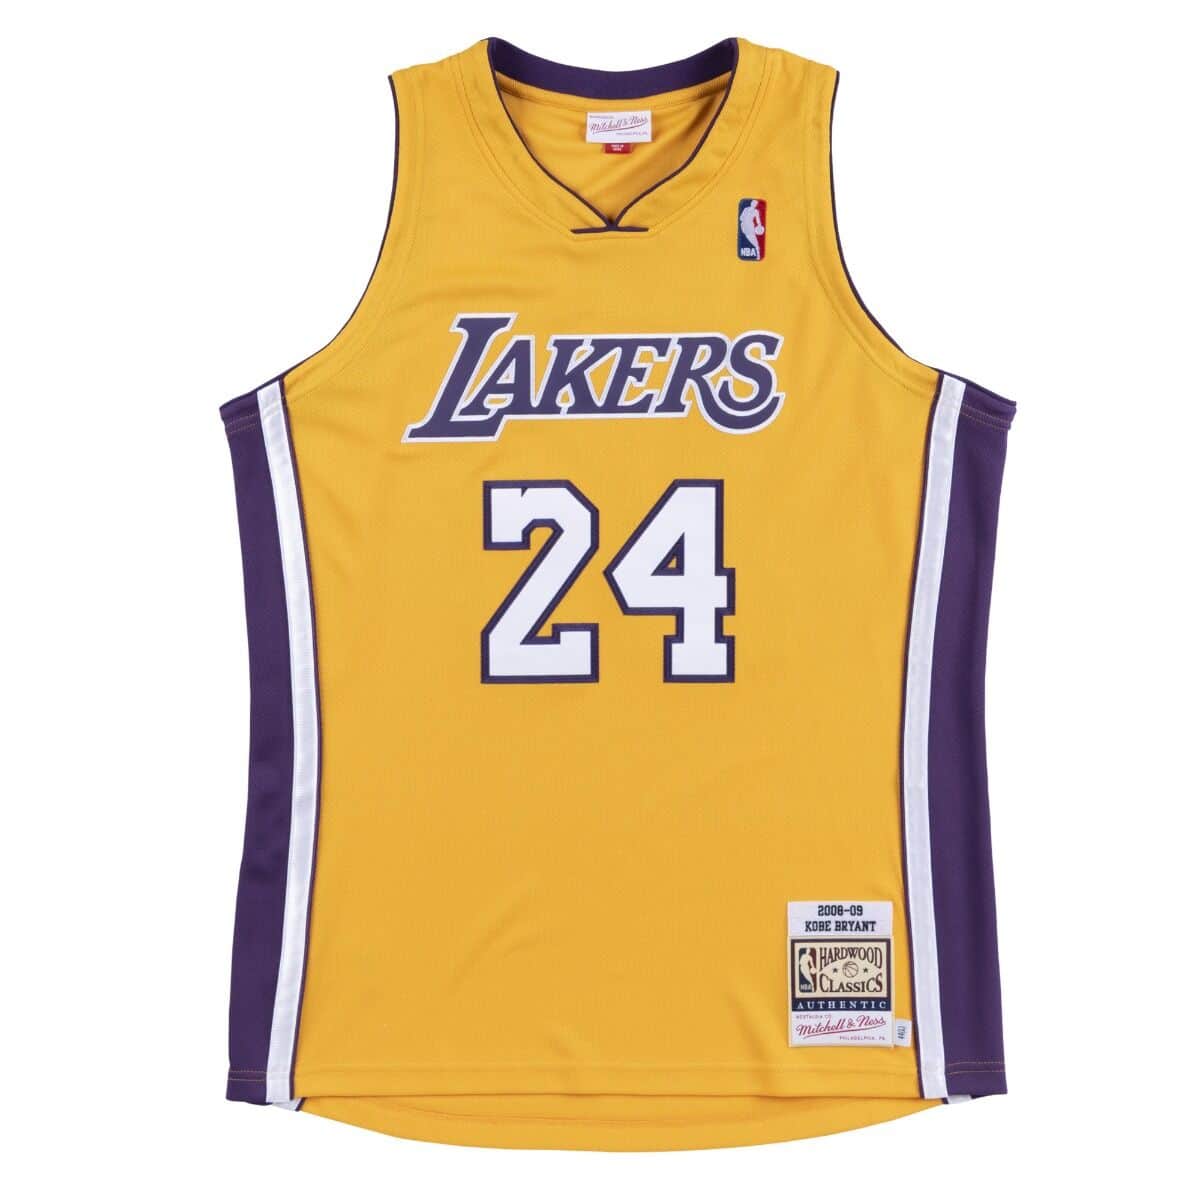 Los Angeles Lakers #24 Kobe Bryant USA Basketball Size XS NBA Jersey Tank  Top